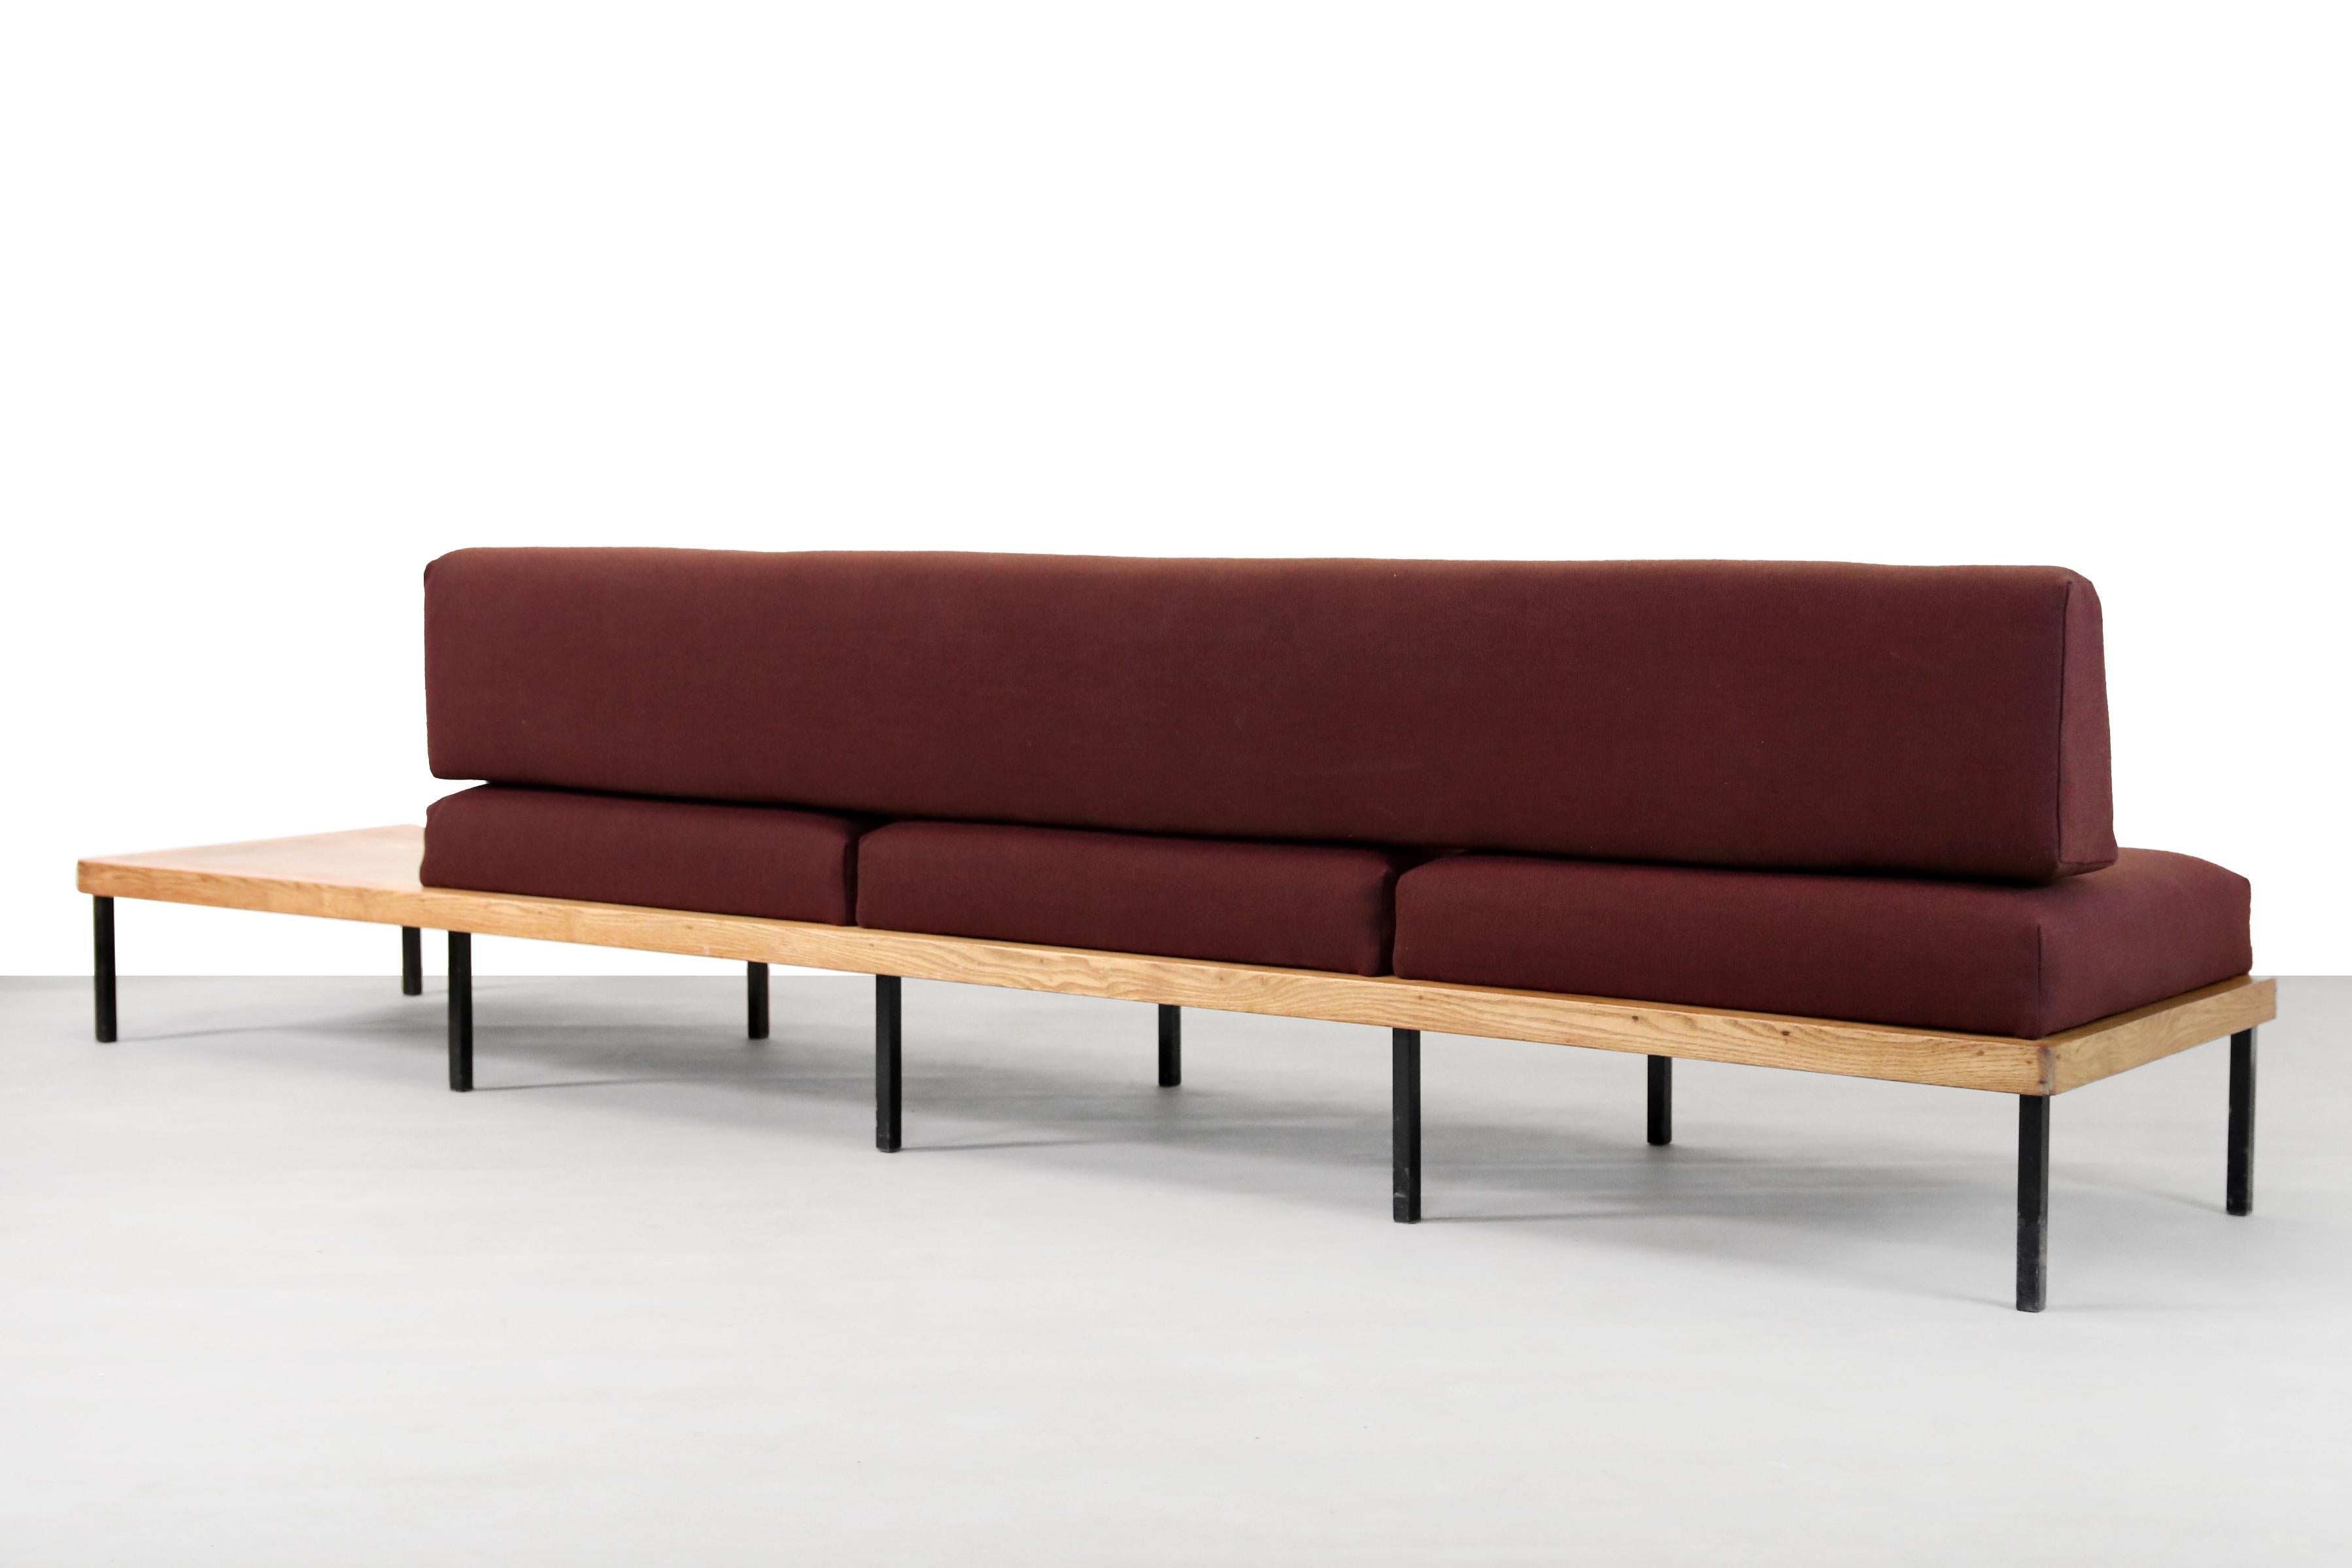 Mid-Century Modern Minimalist Oak Wooden Design Bench Dutch Design Sofa with integrated table